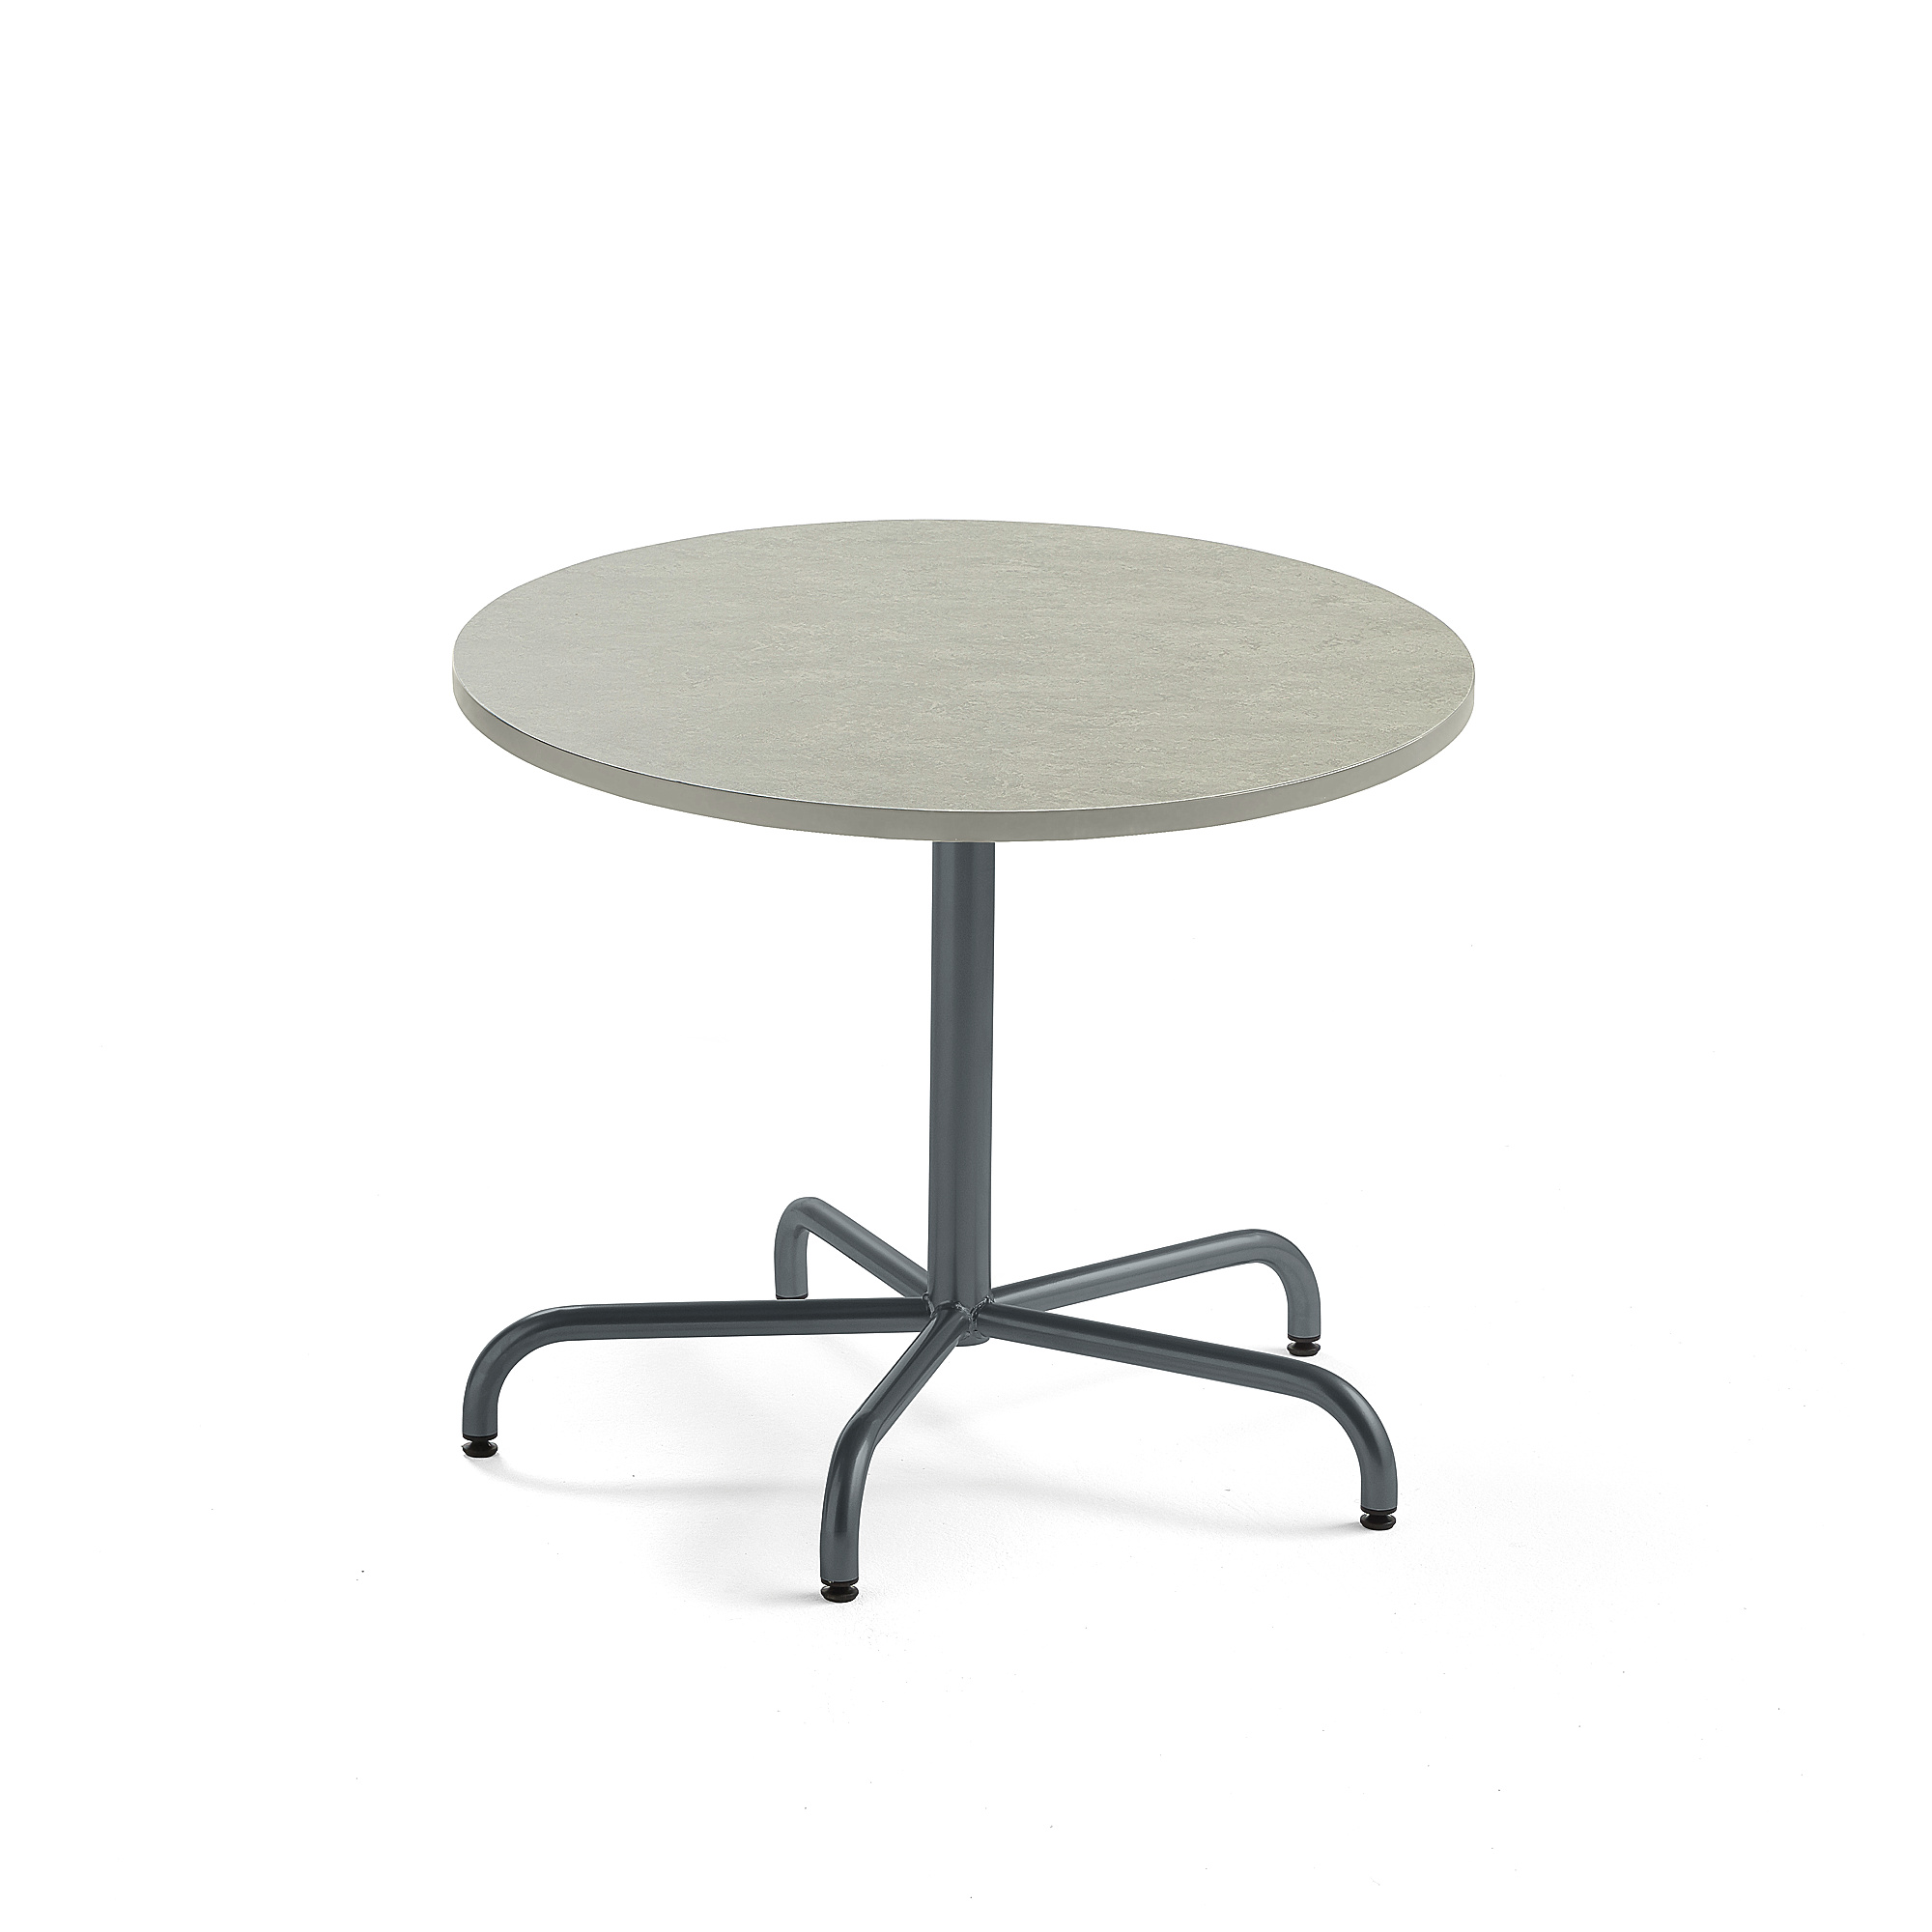 Stůl PLURAL, Ø900x720 mm, linoleum, šedá, antracitově šedá